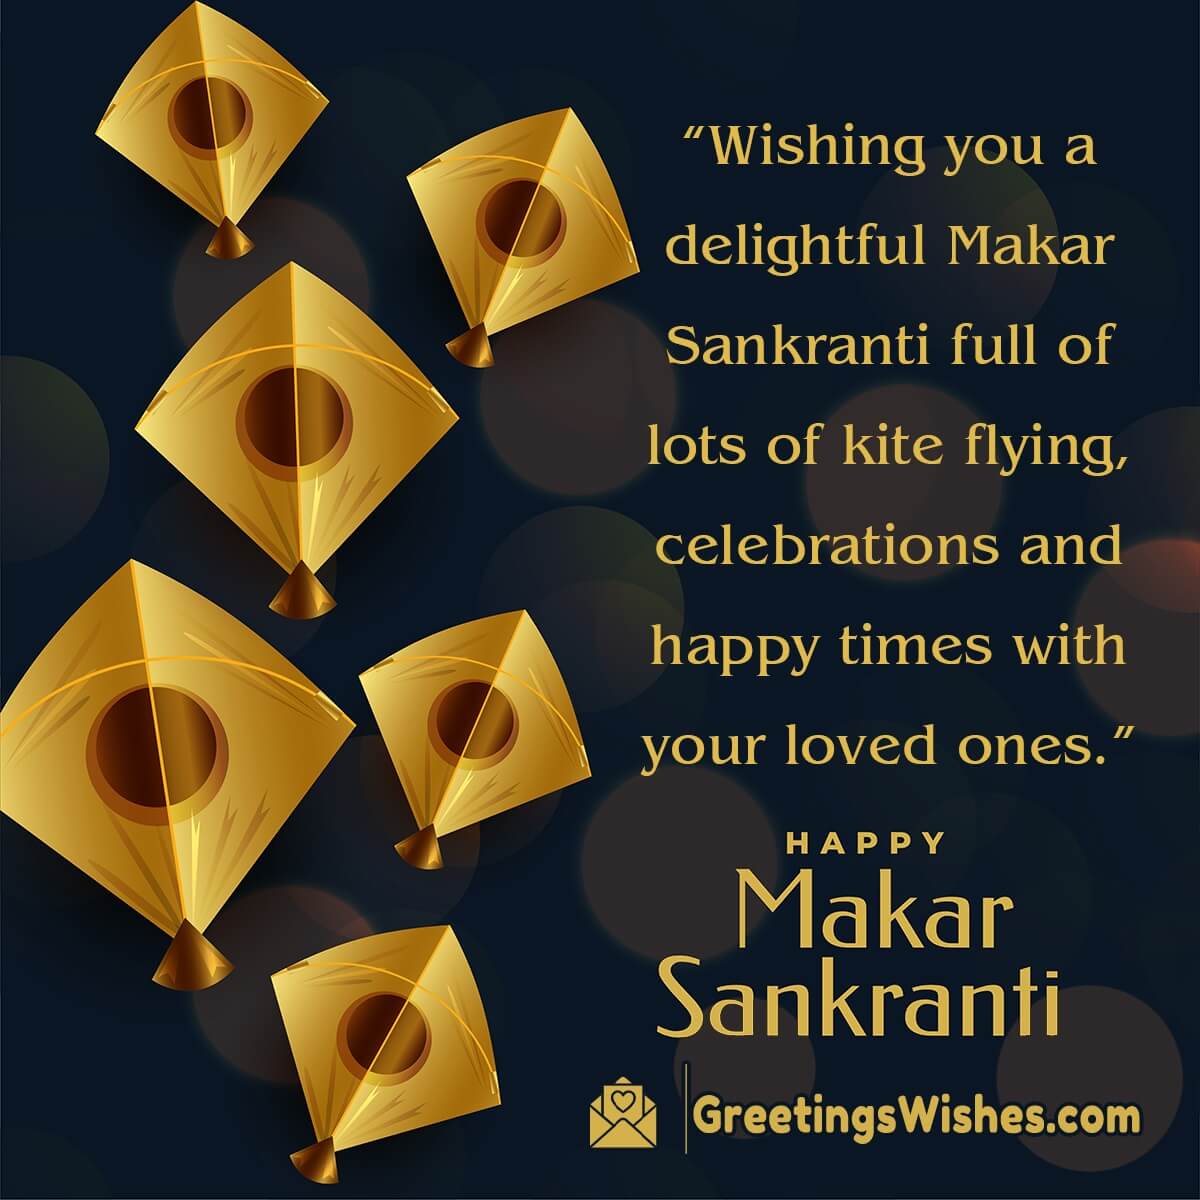 Happy Makar Sankranti Massage in English